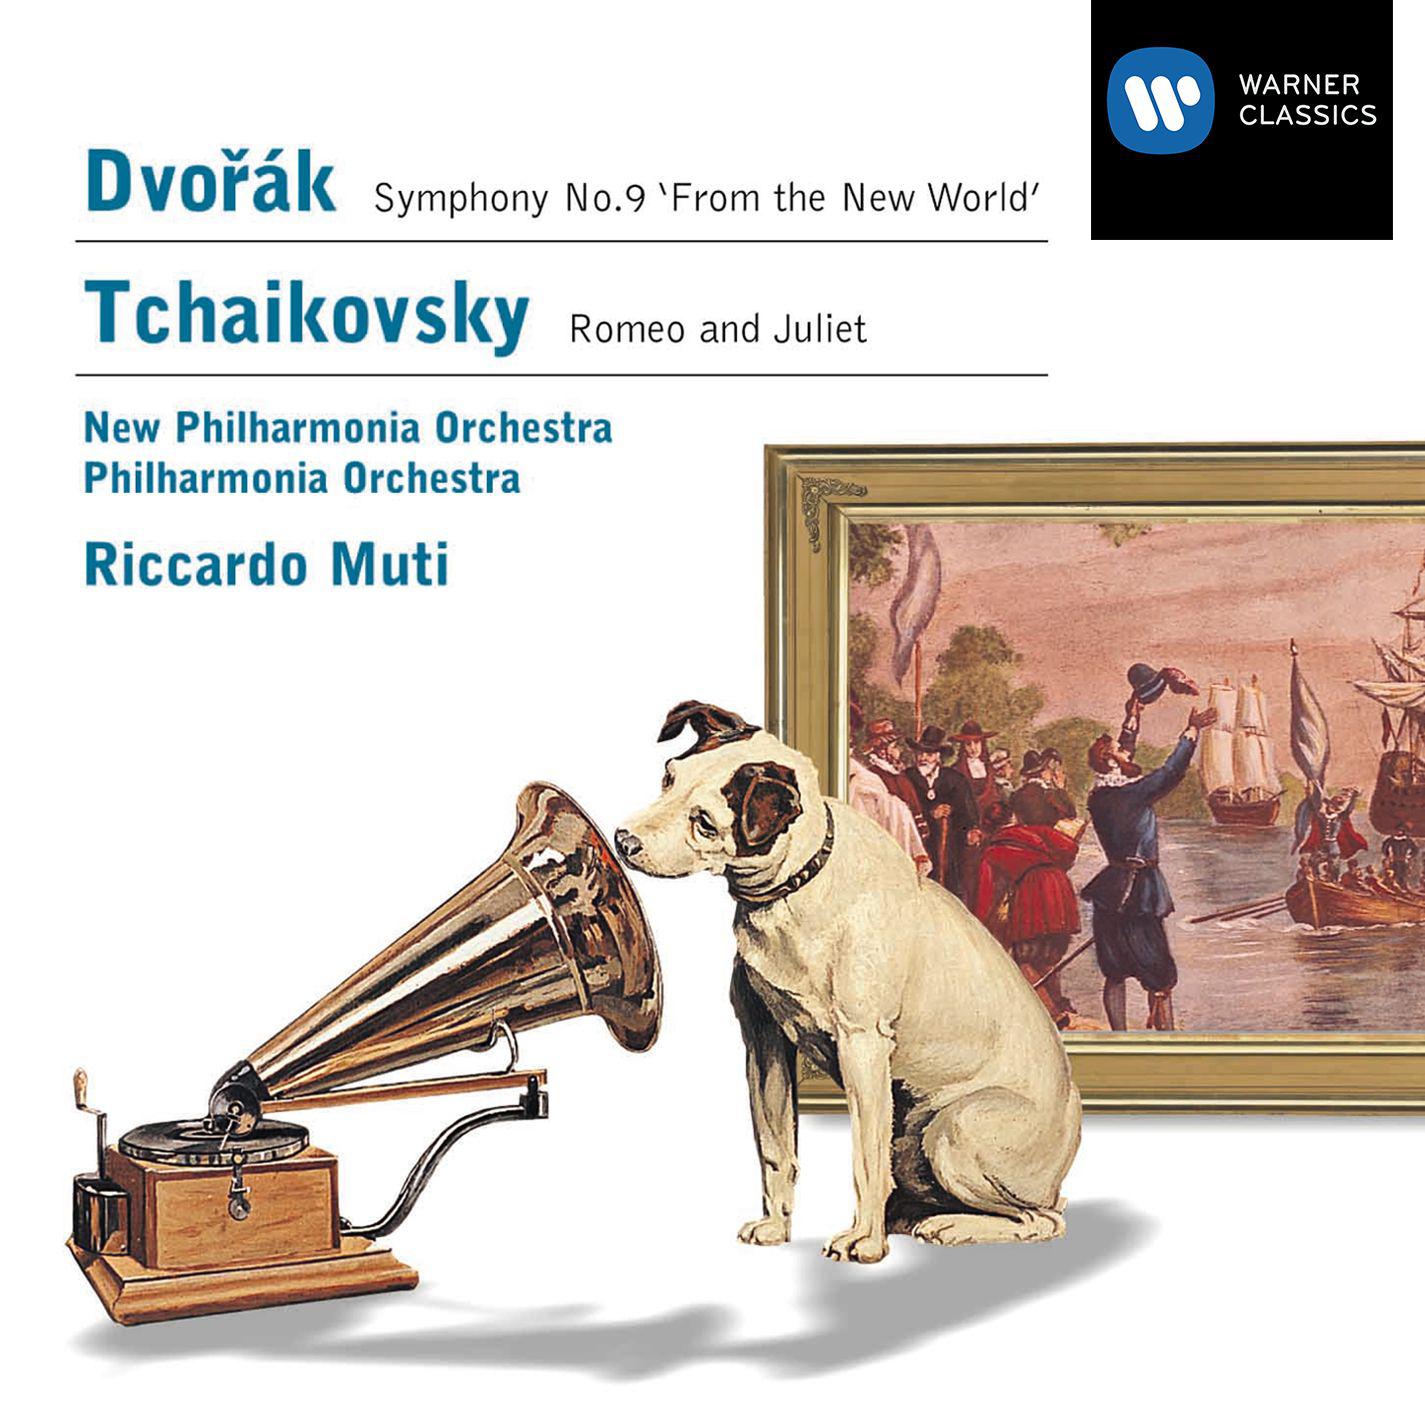 Dvora k: Symphony No. 9 ' From the New World'  Tchaikovsky: Romeo and Juliet